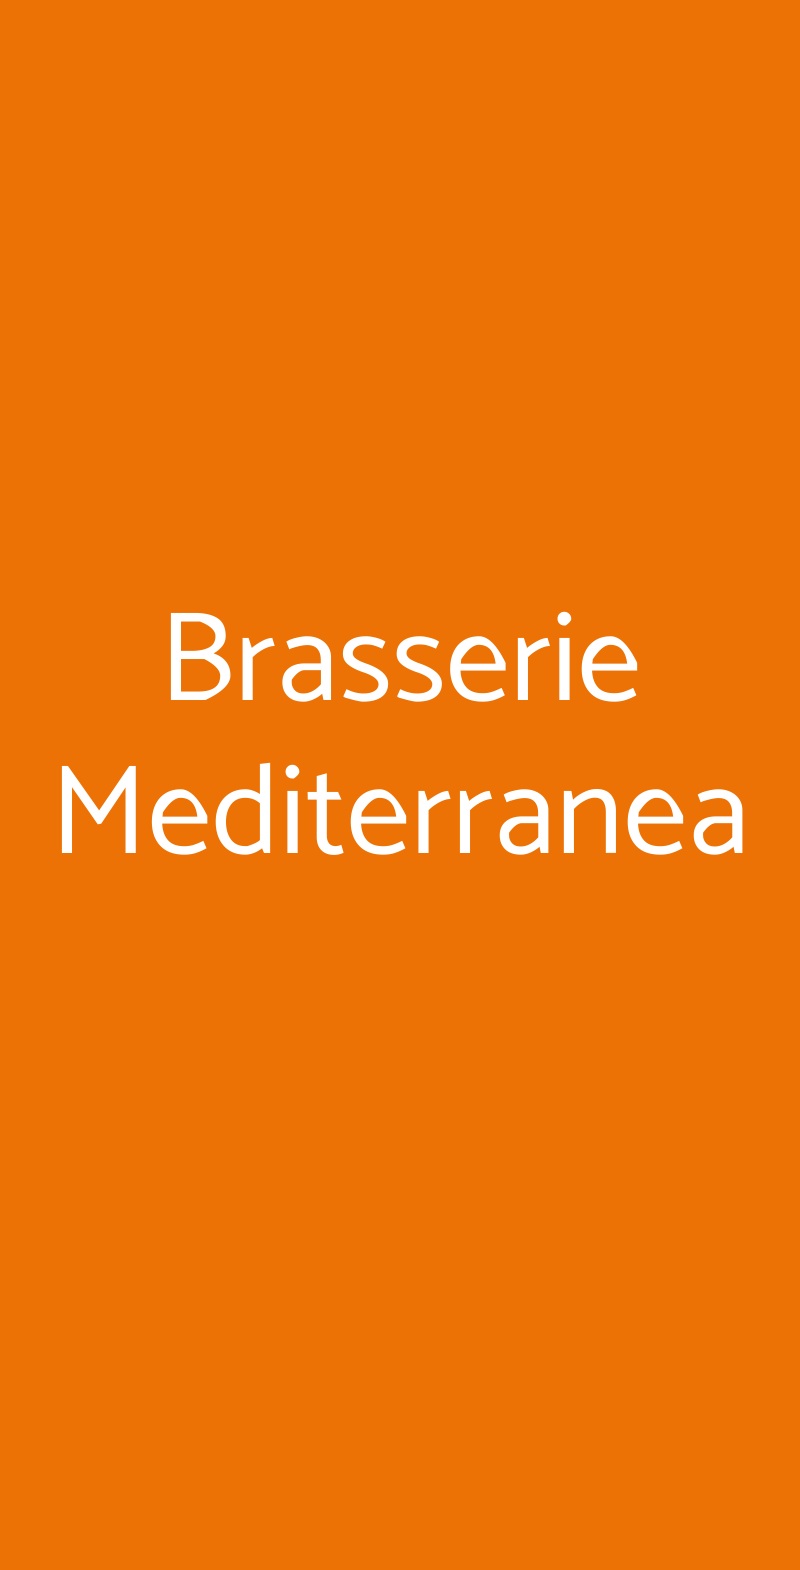 Brasserie Mediterranea Milano menù 1 pagina